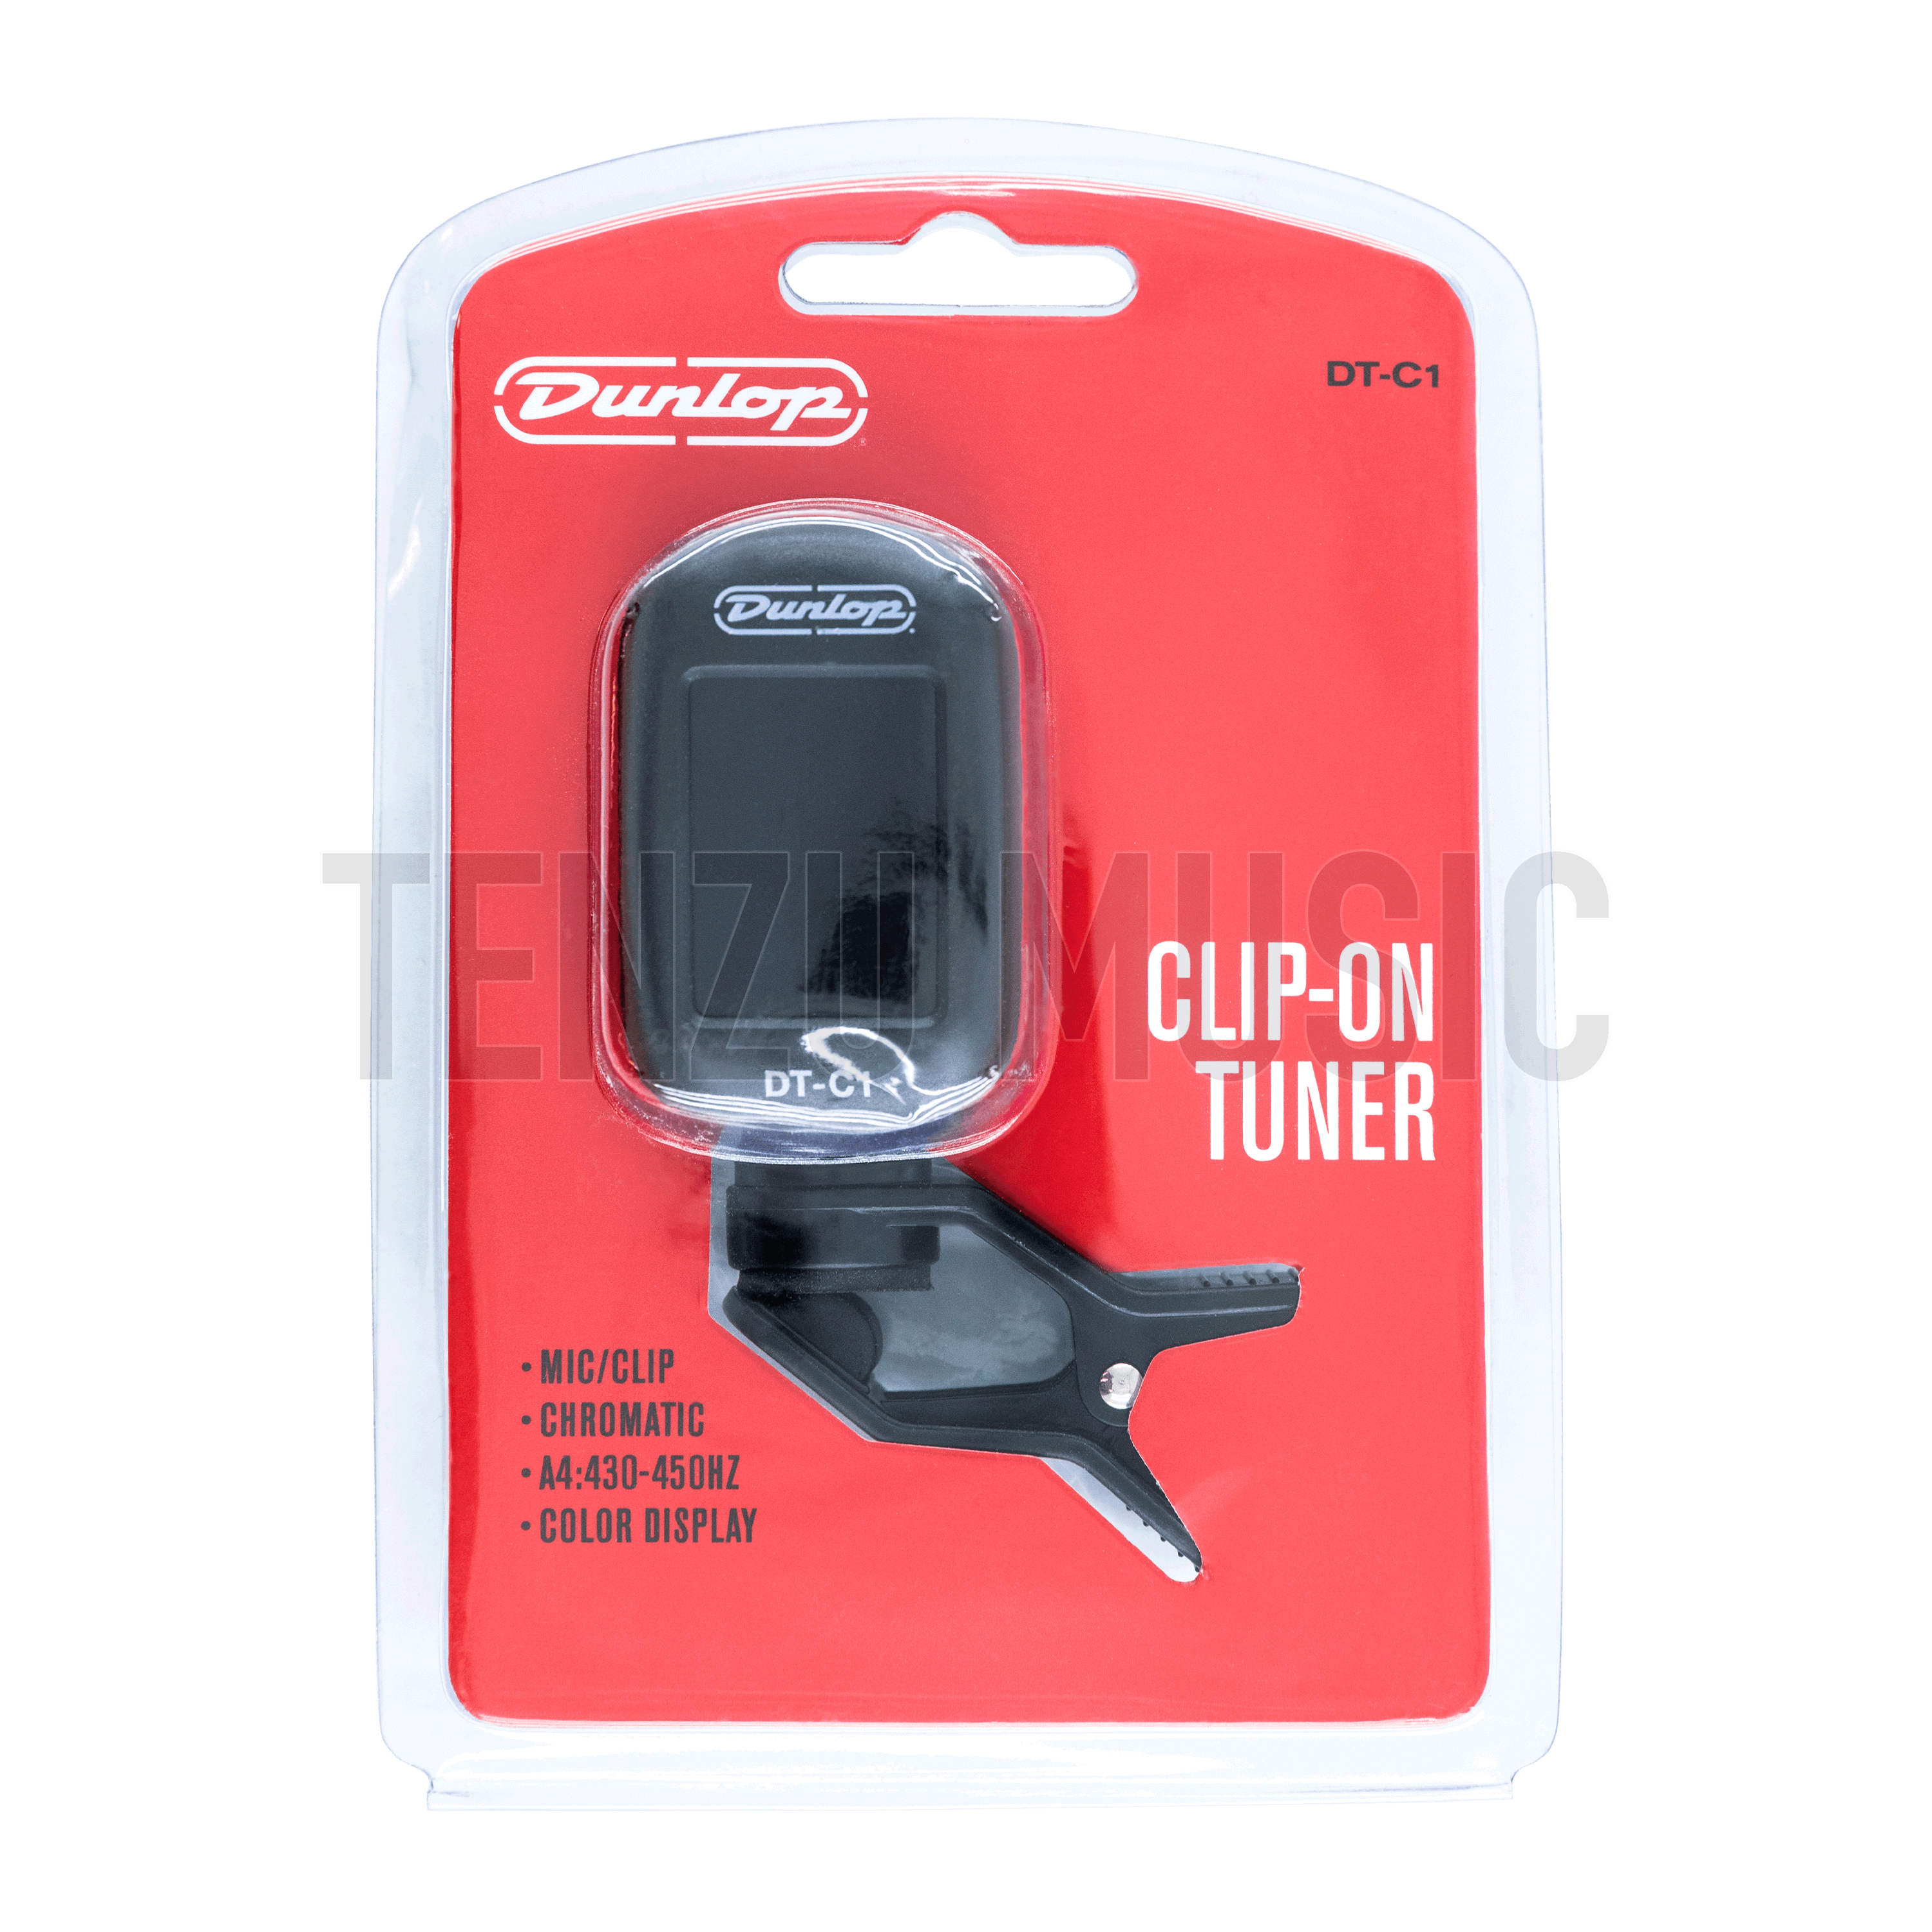 Dunlop clip-on tuner DT-C1